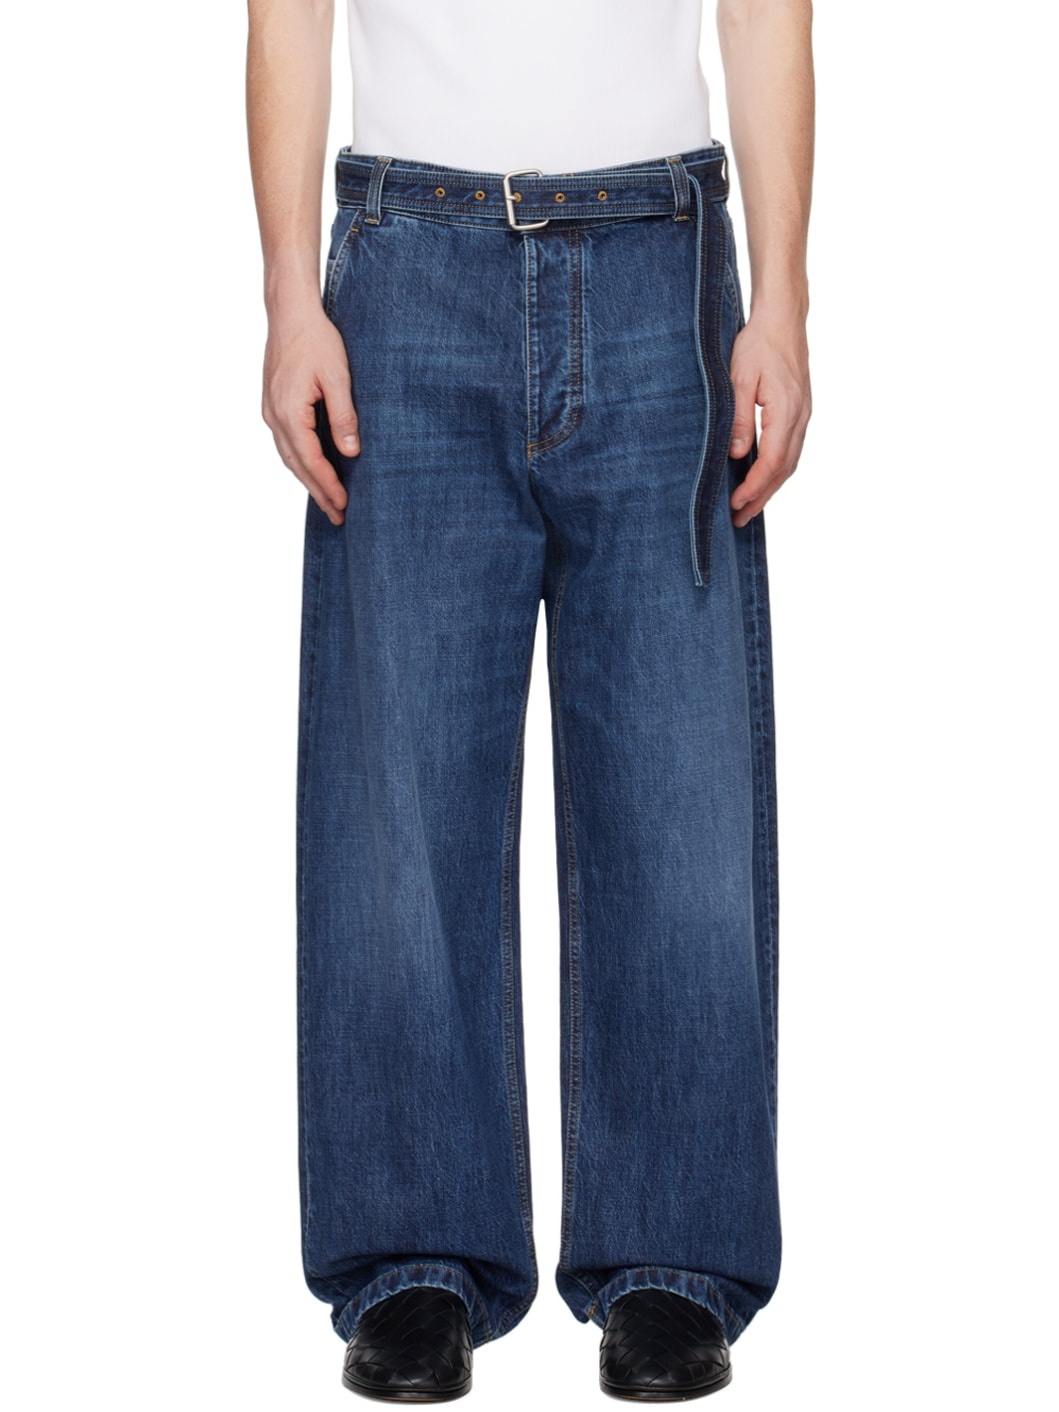 Indigo Belted Jeans - 1